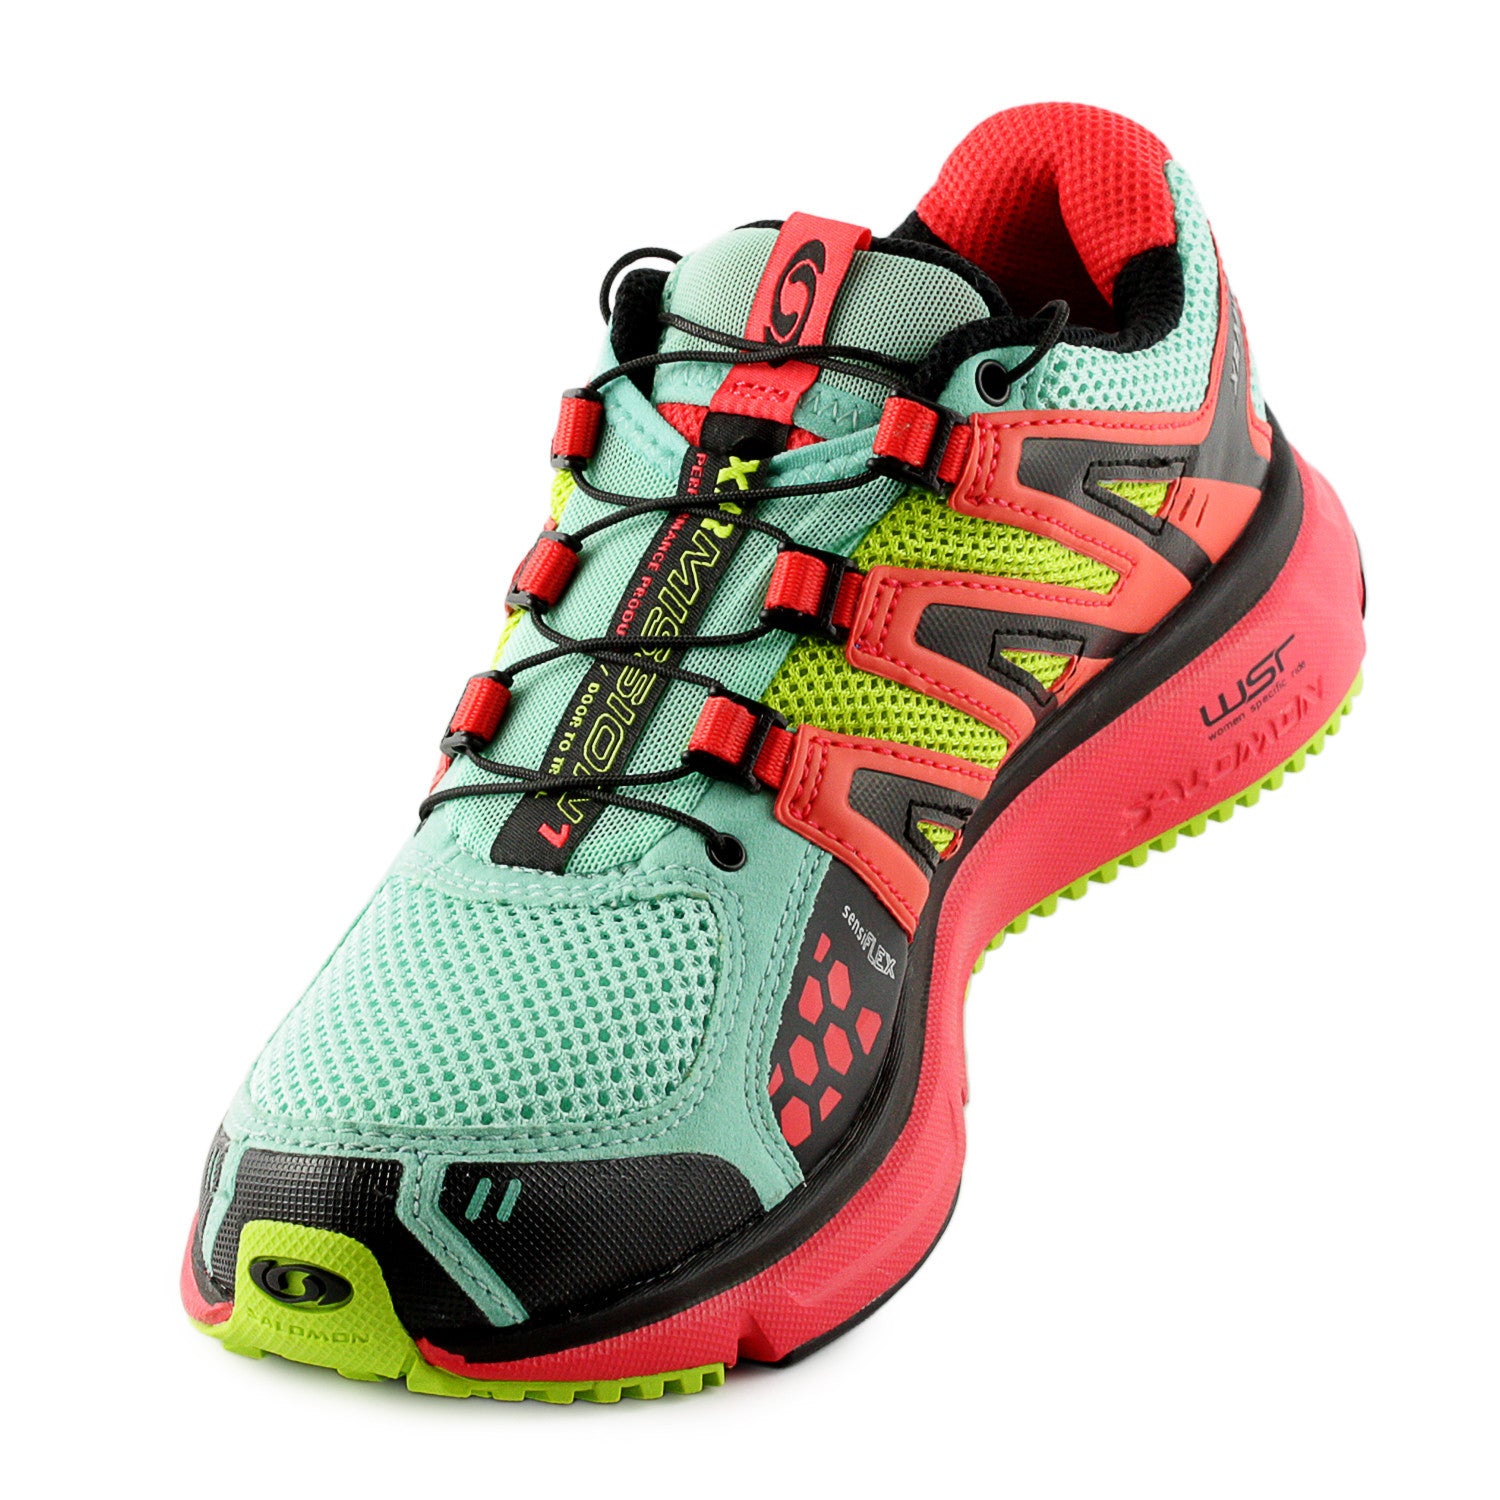 Women's Trail Running Shoes - Shop Salomon